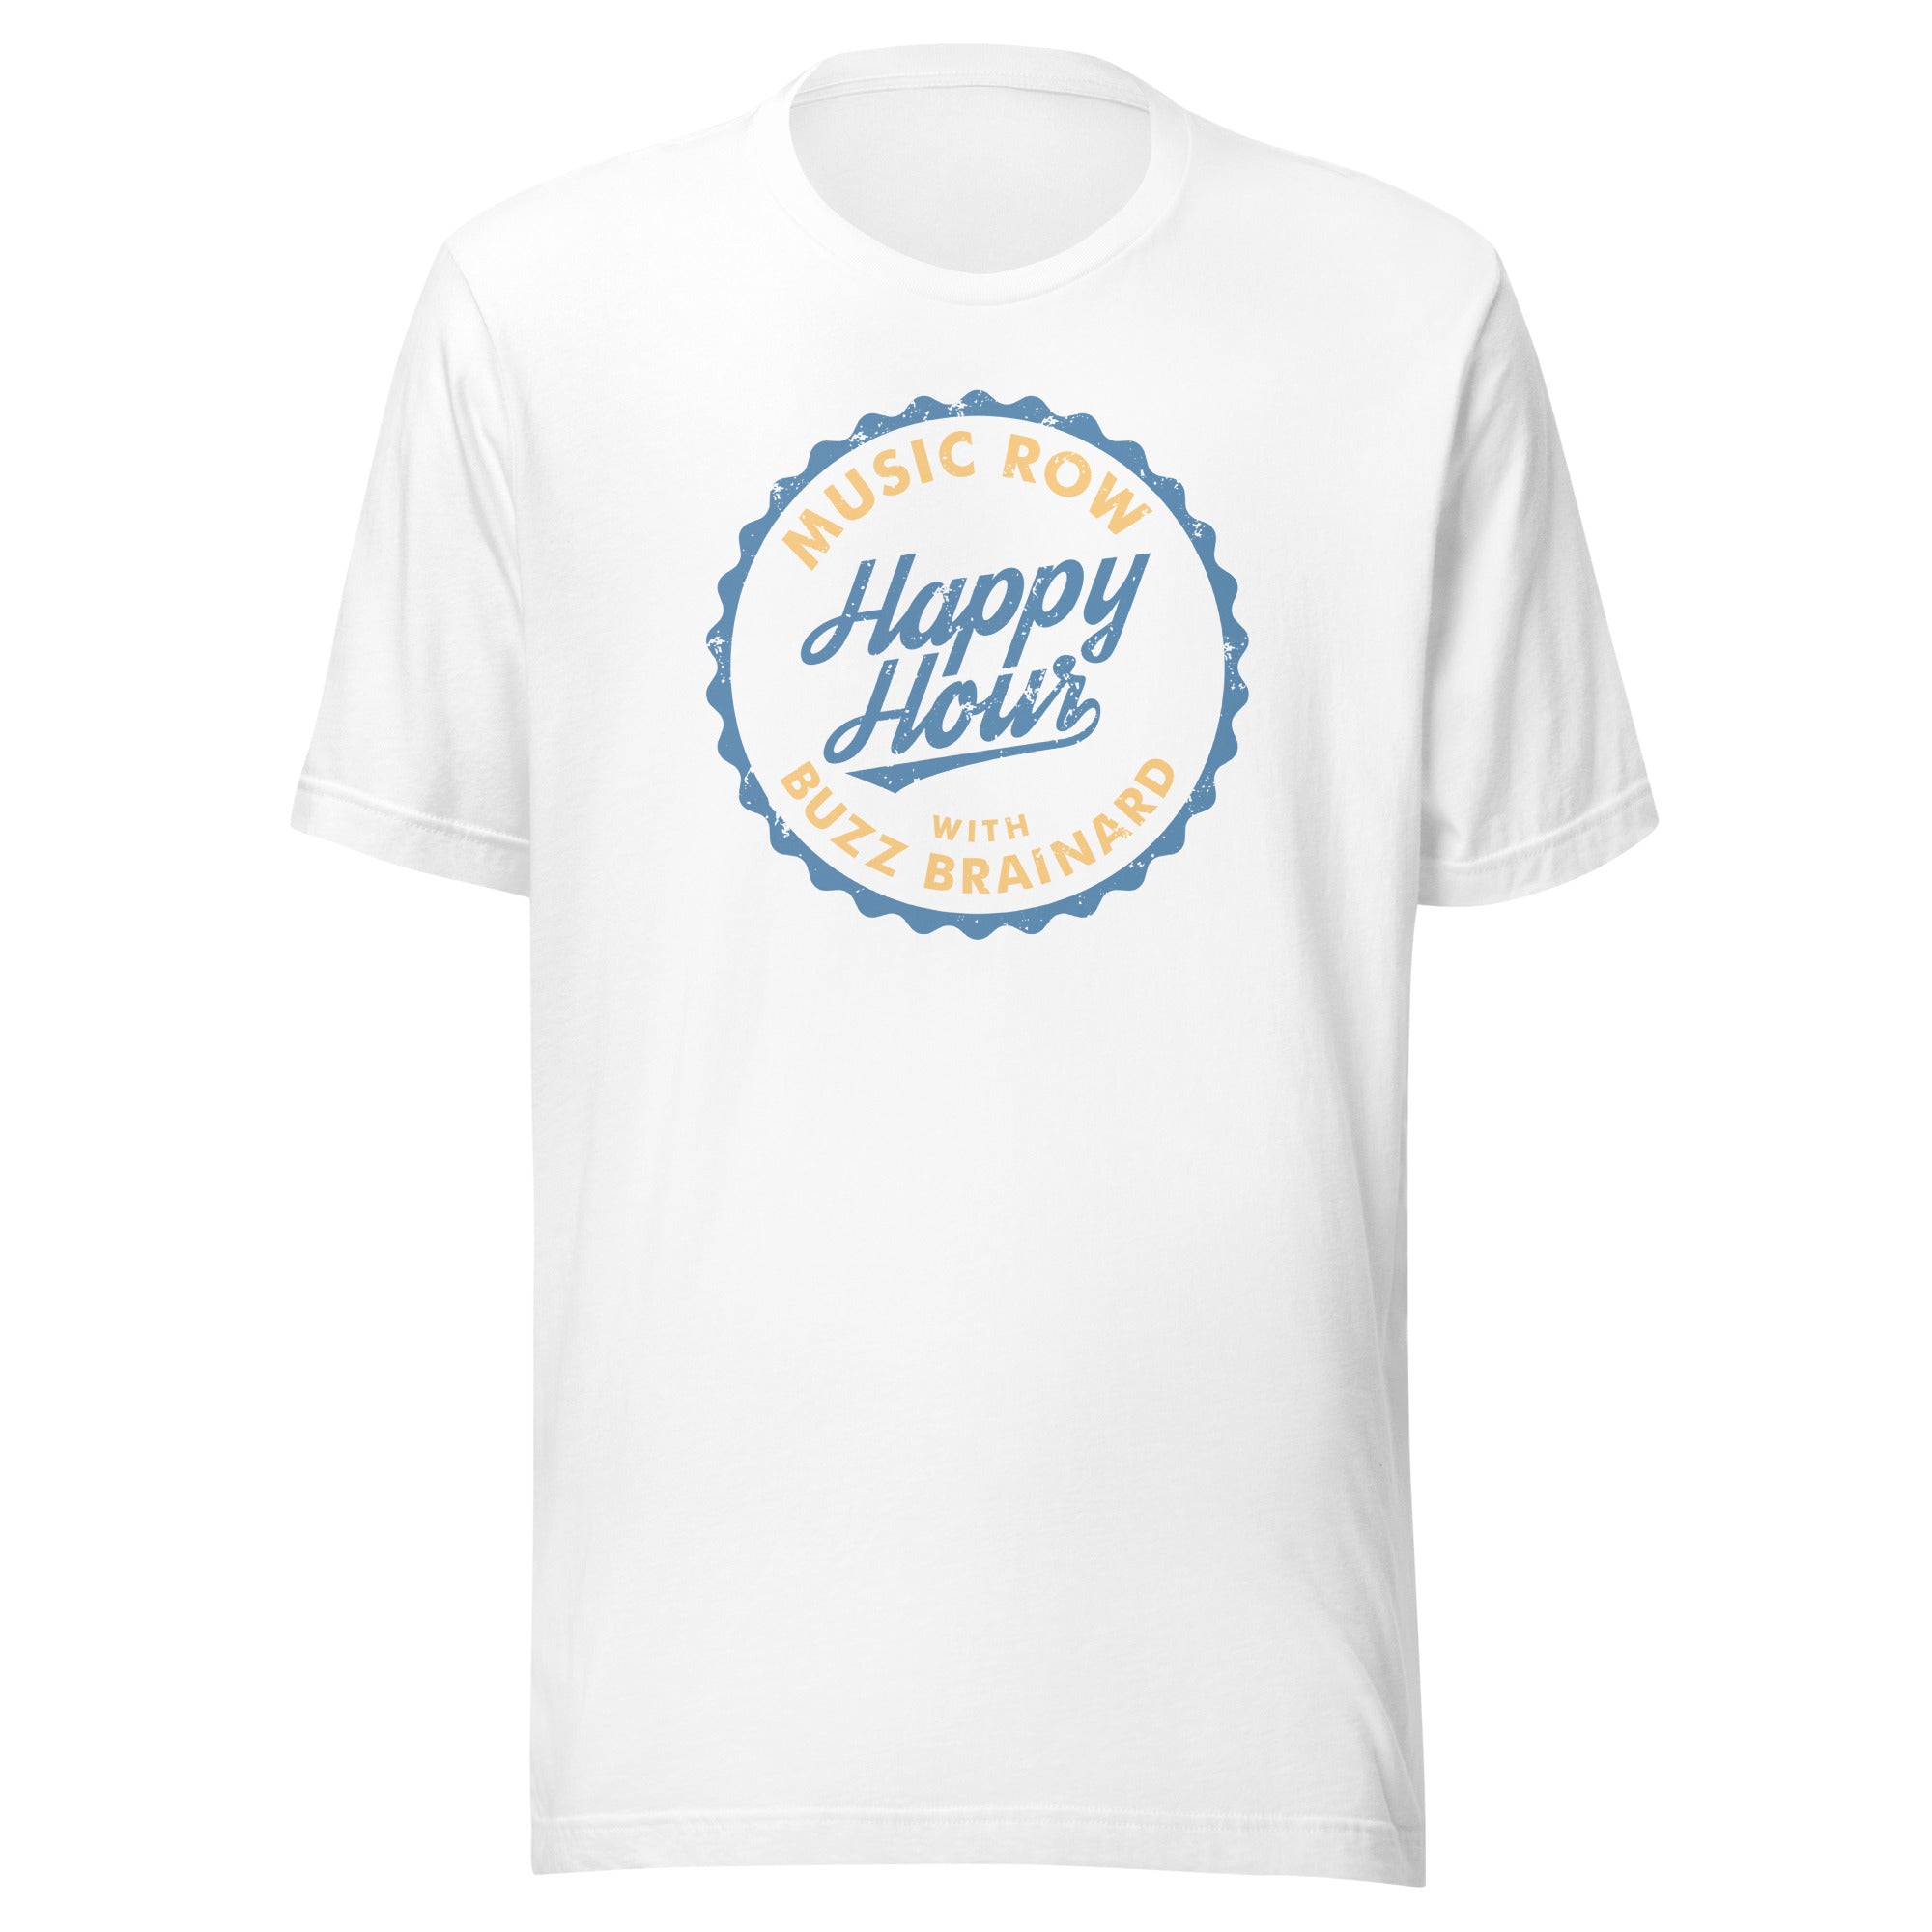 The Highway: White Music Row Happy Hour T-shirt